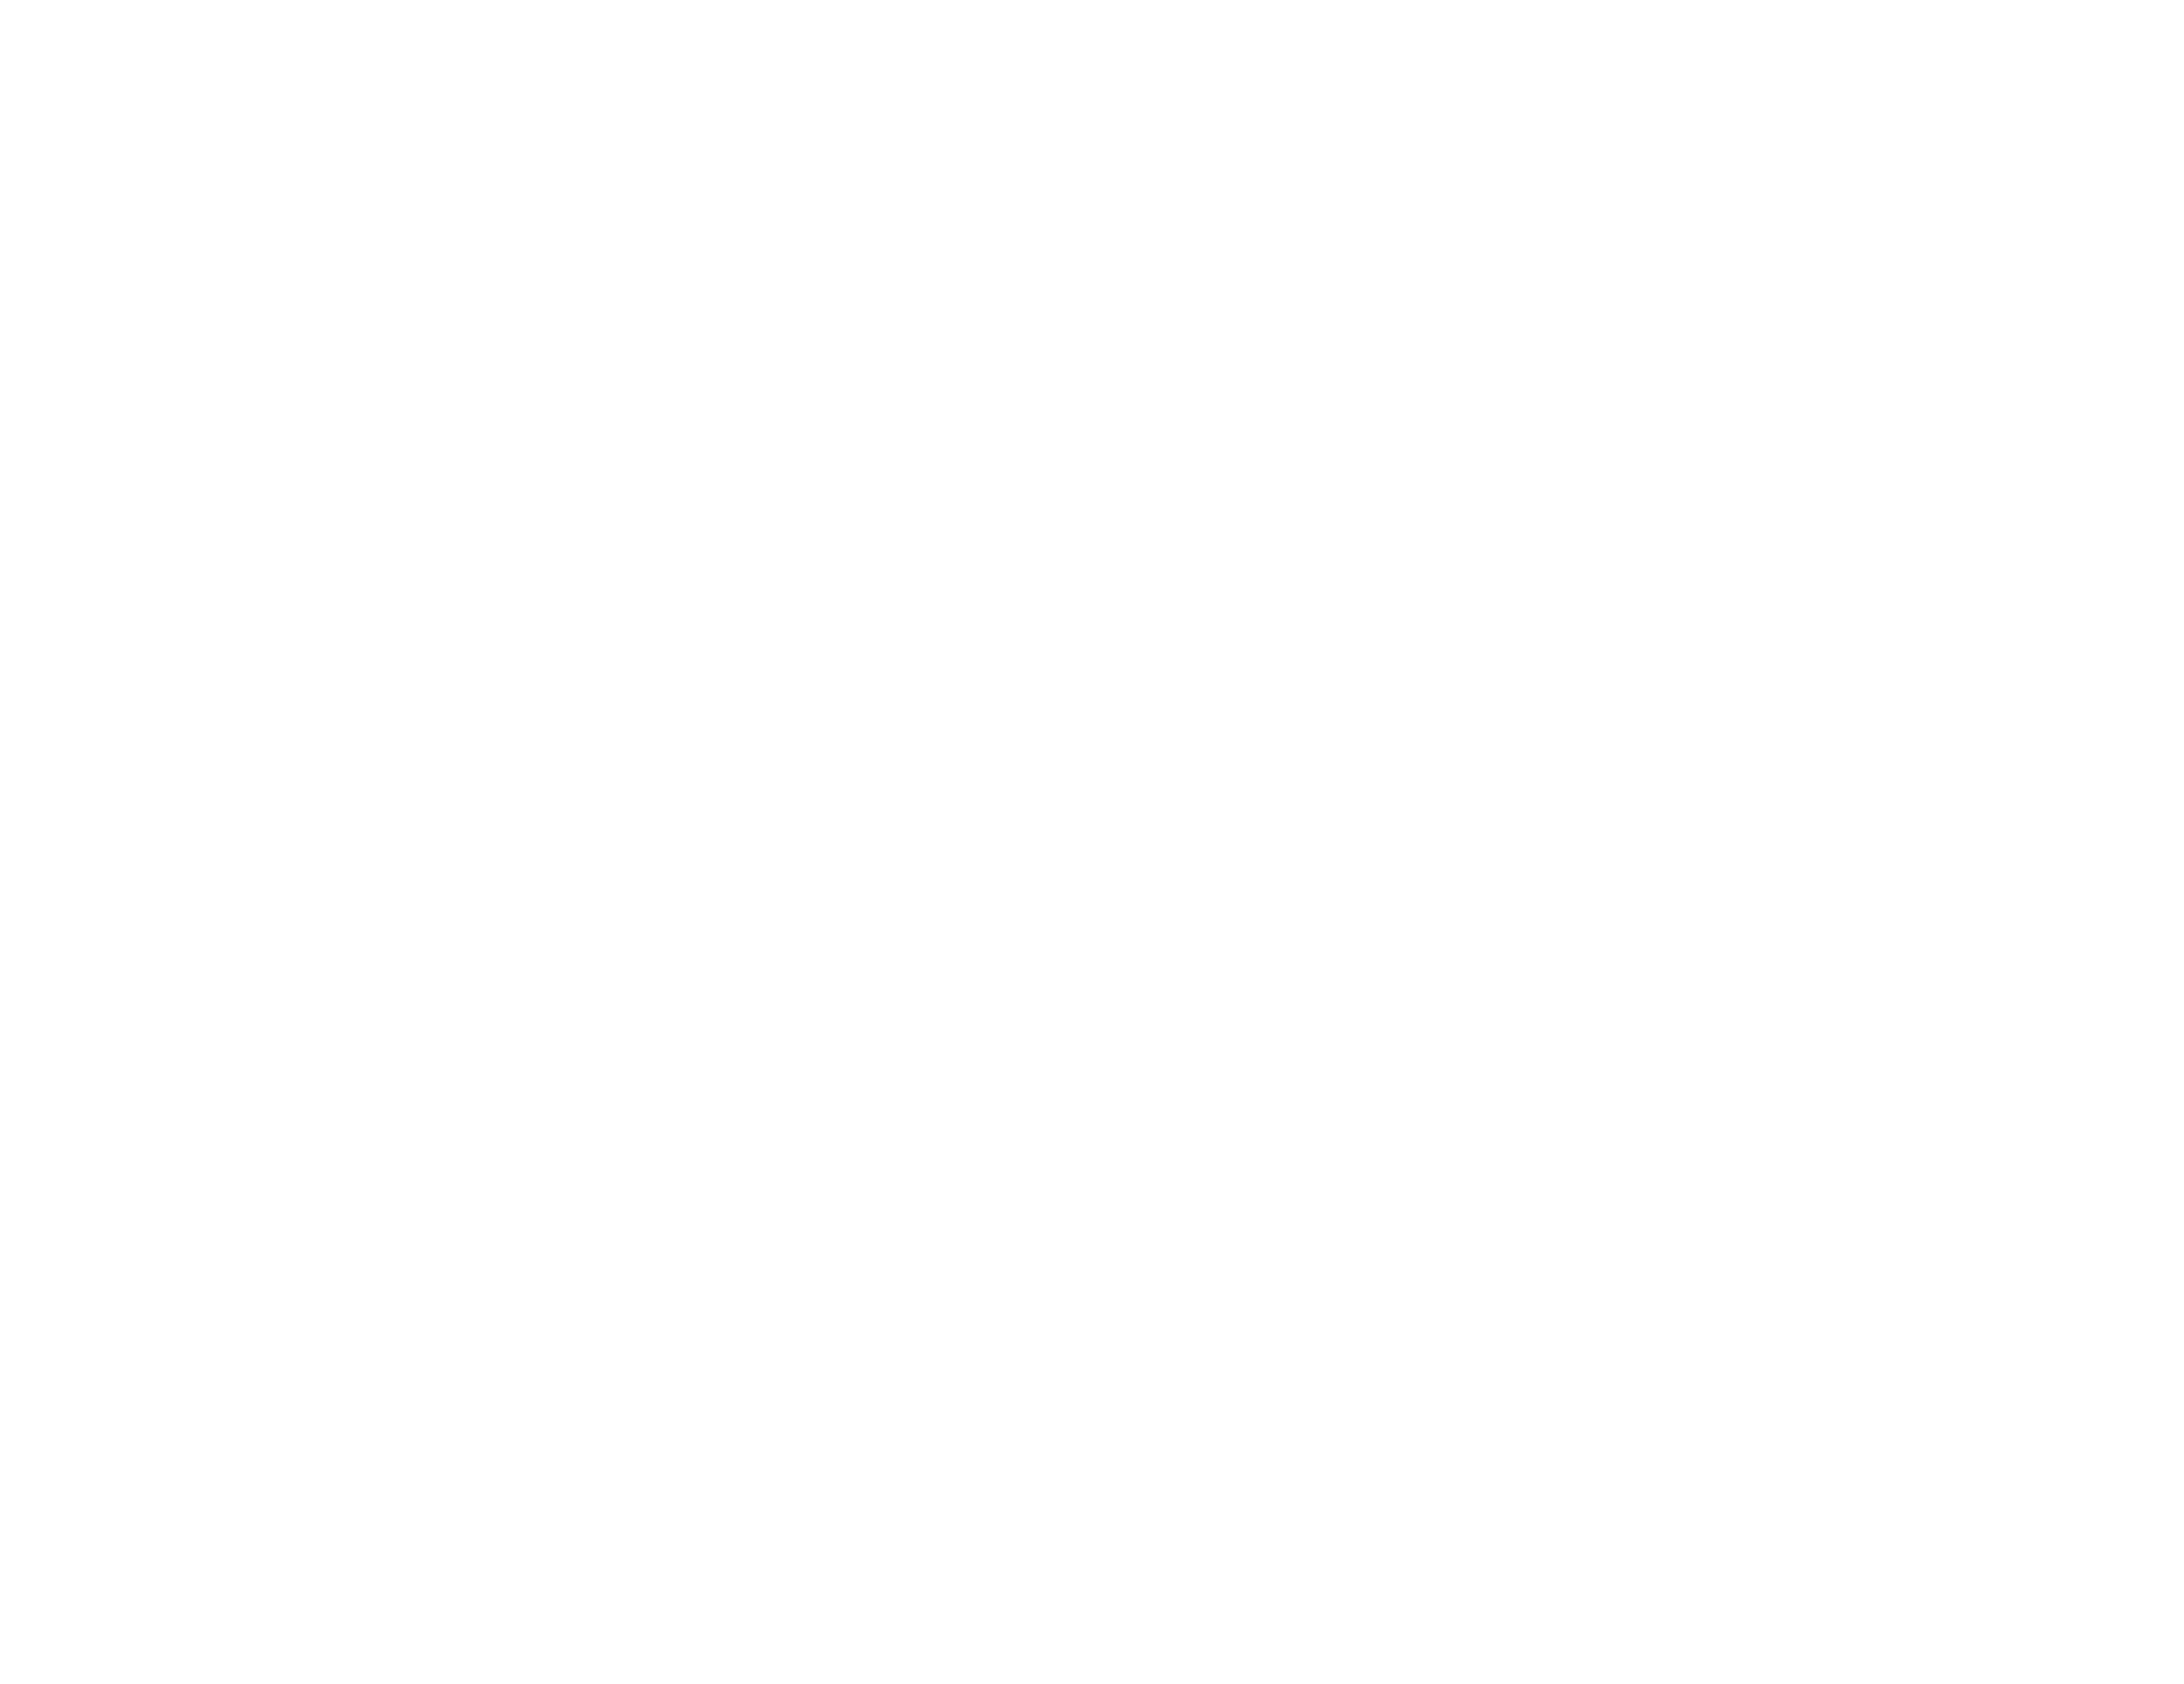 Anastacia in World Forum Theater